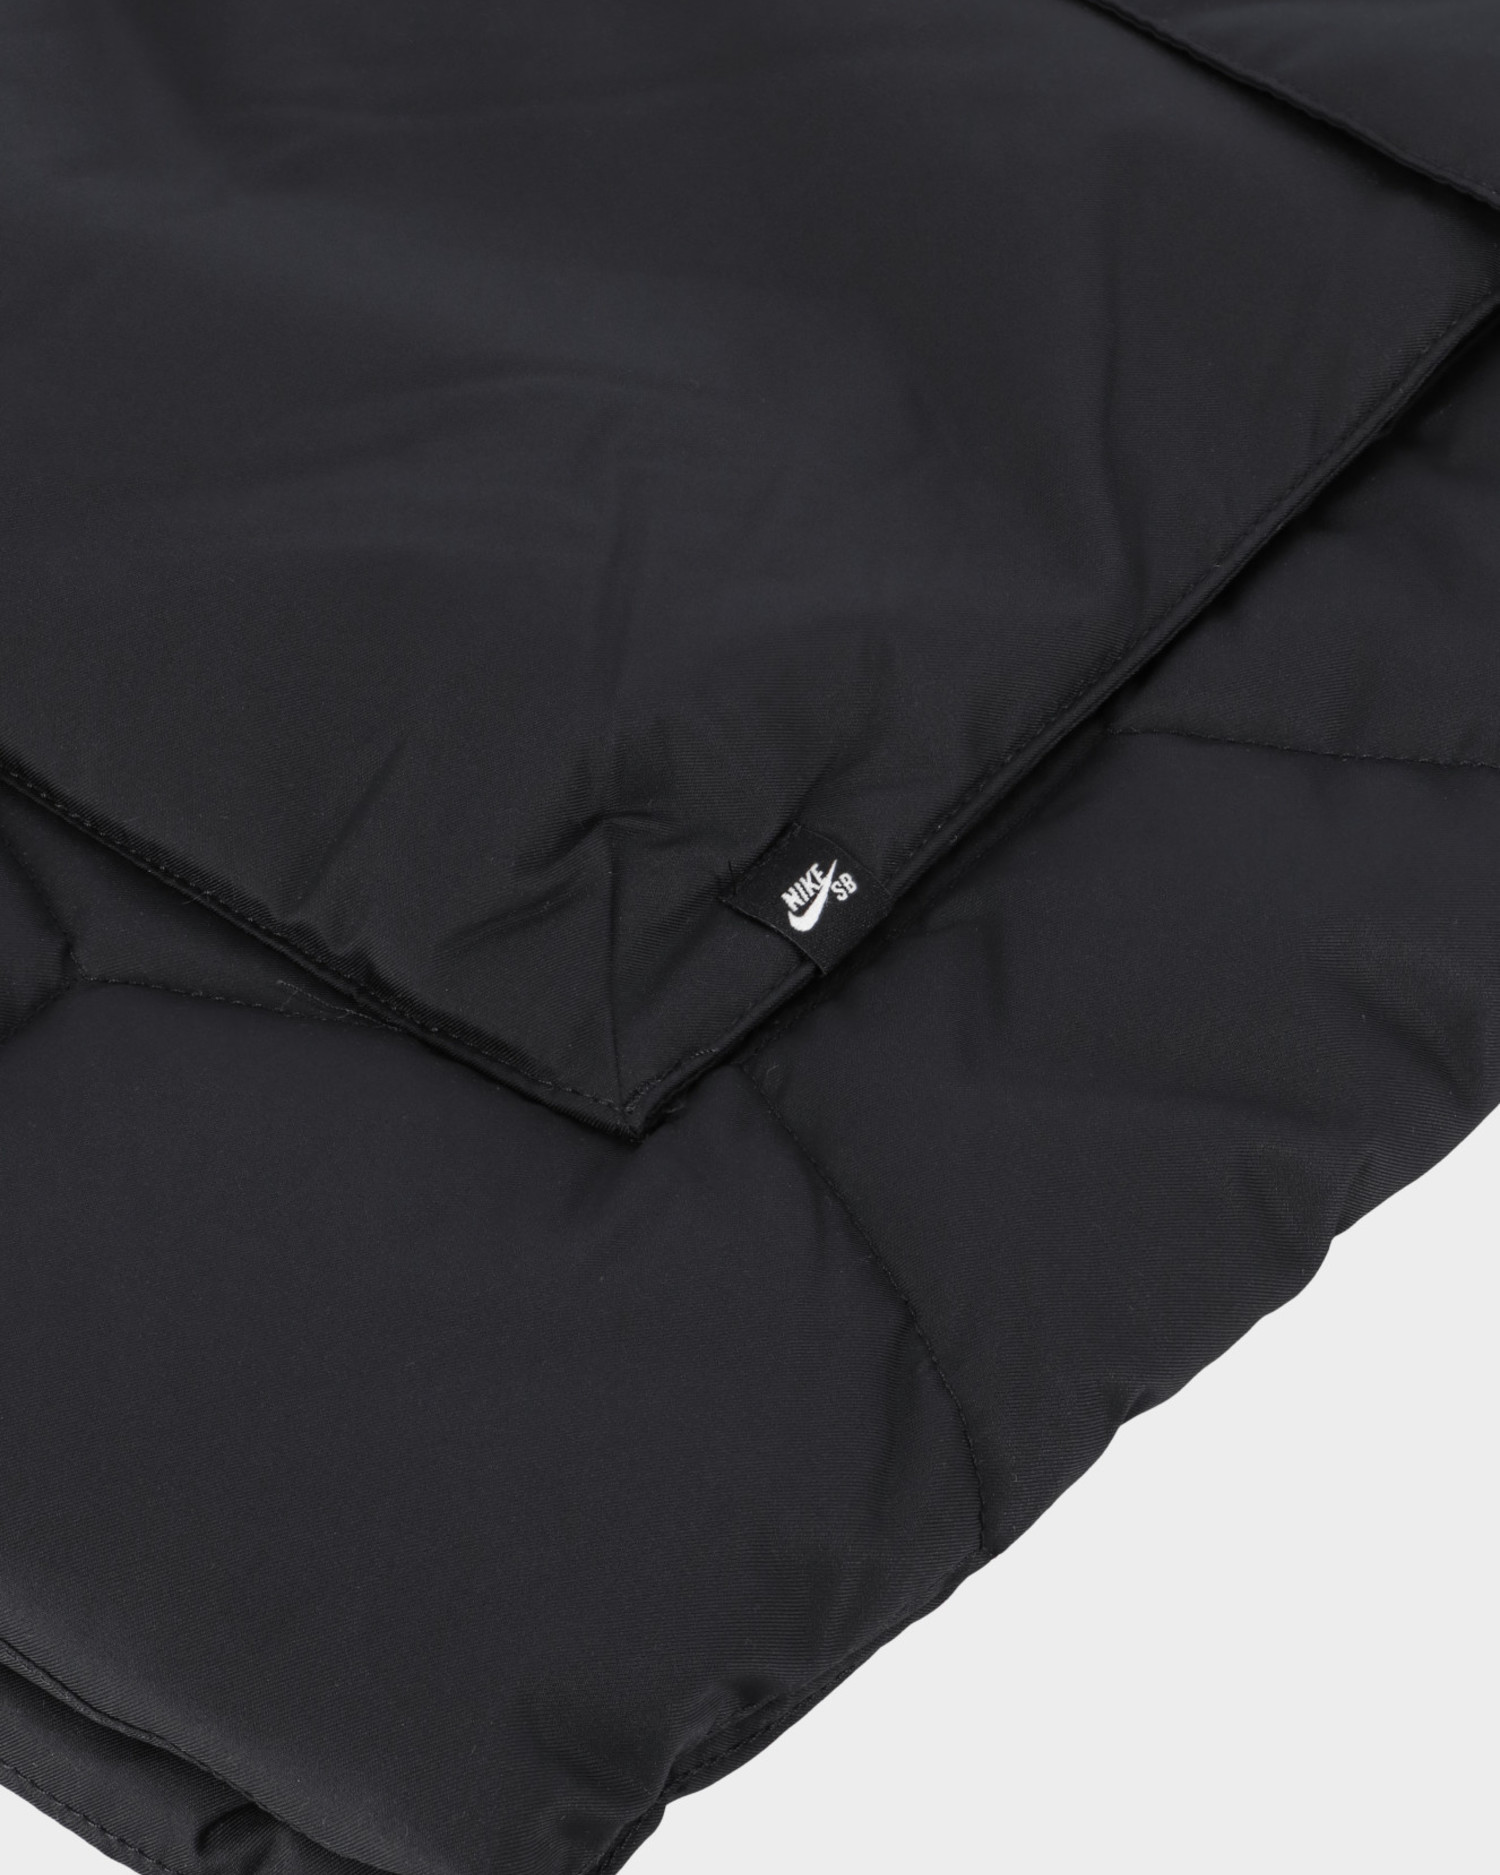 Nike SB Storm-FIT  Ishod Wair Jacket Black/Anthracite/University Red